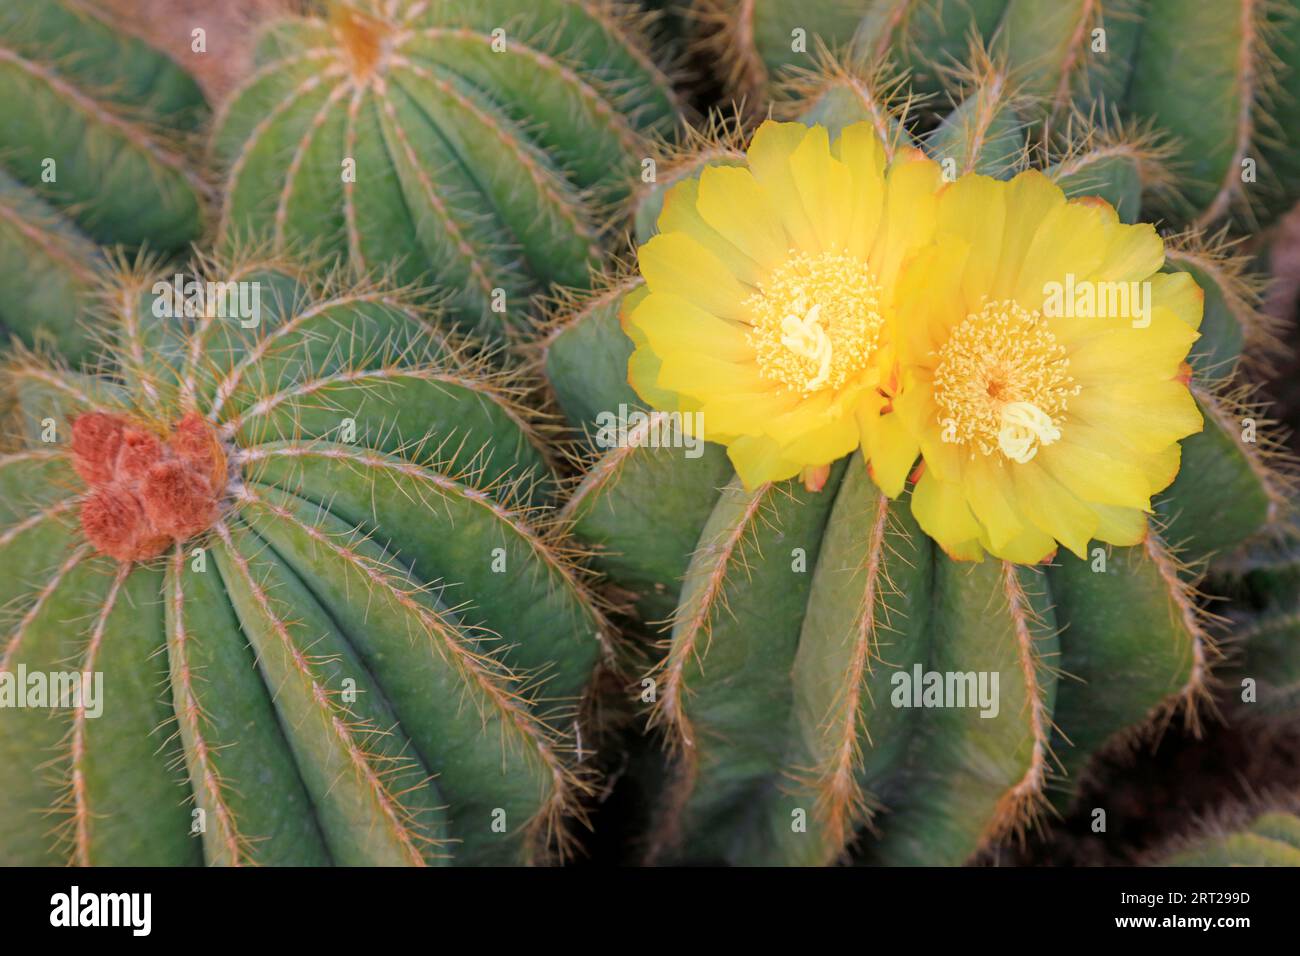 Cactus plants Notocactus magnificus in a garden Stock Photo